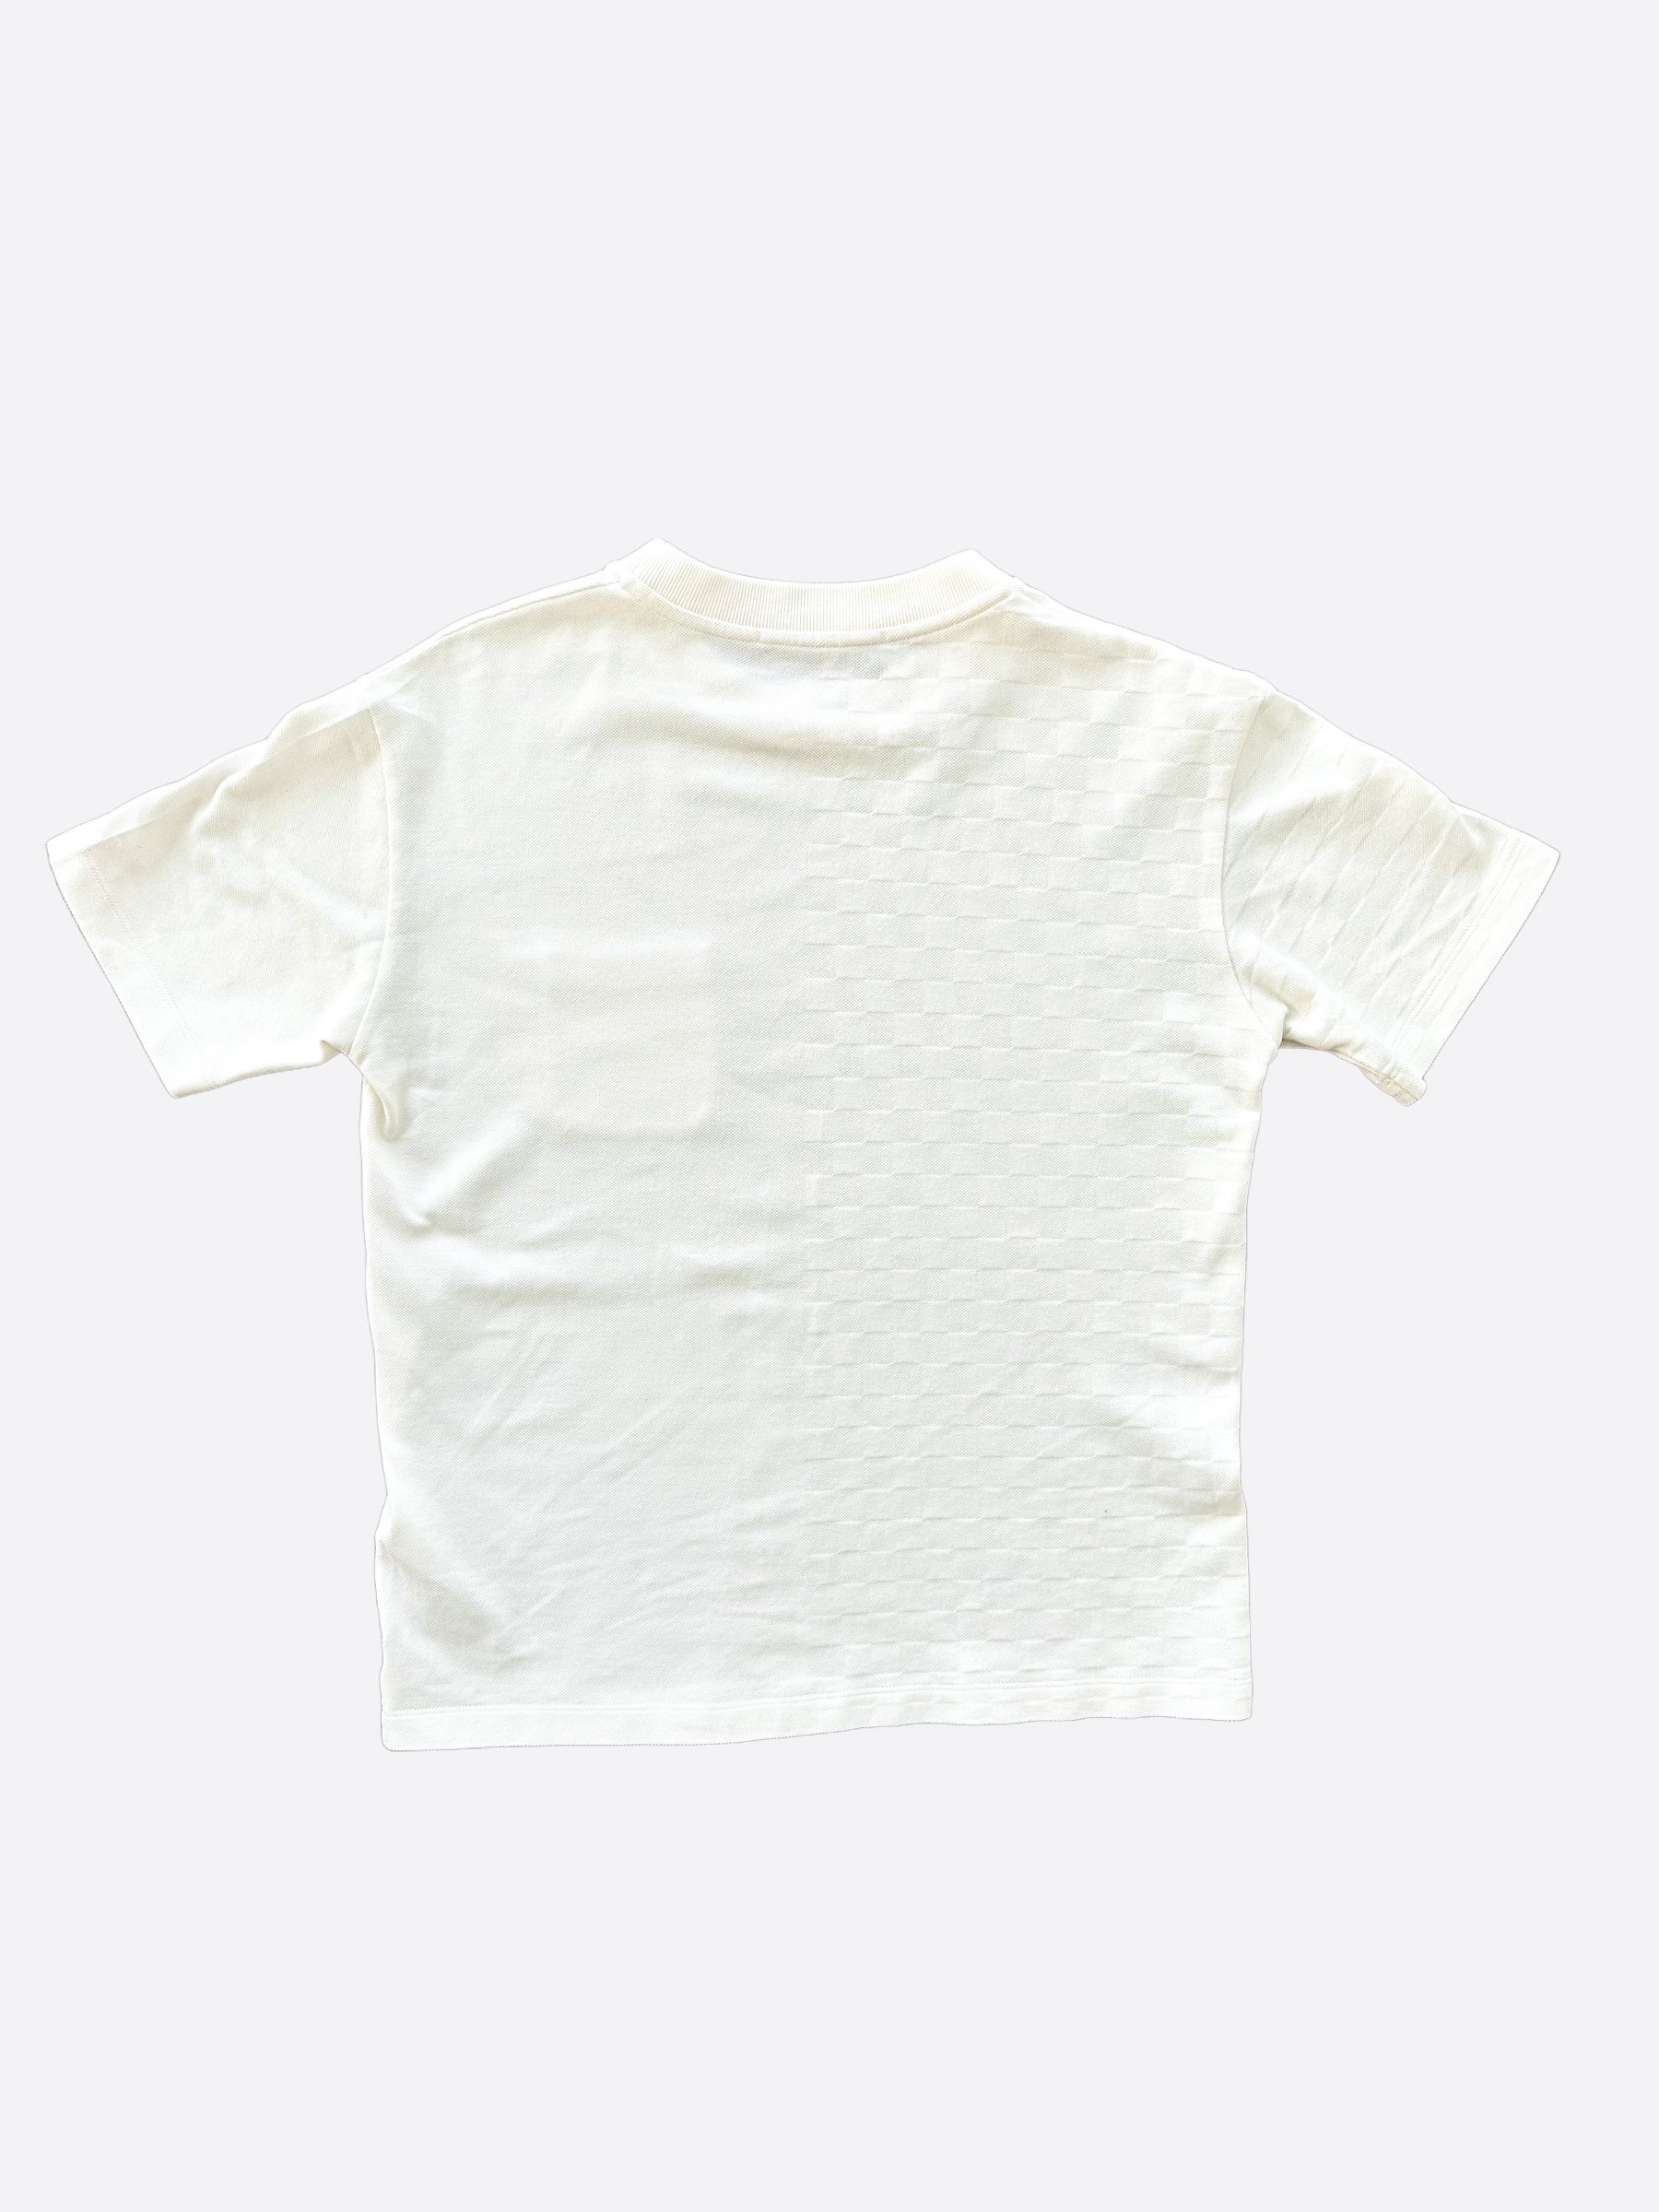 Louis Vuitton Damier T-Shirt